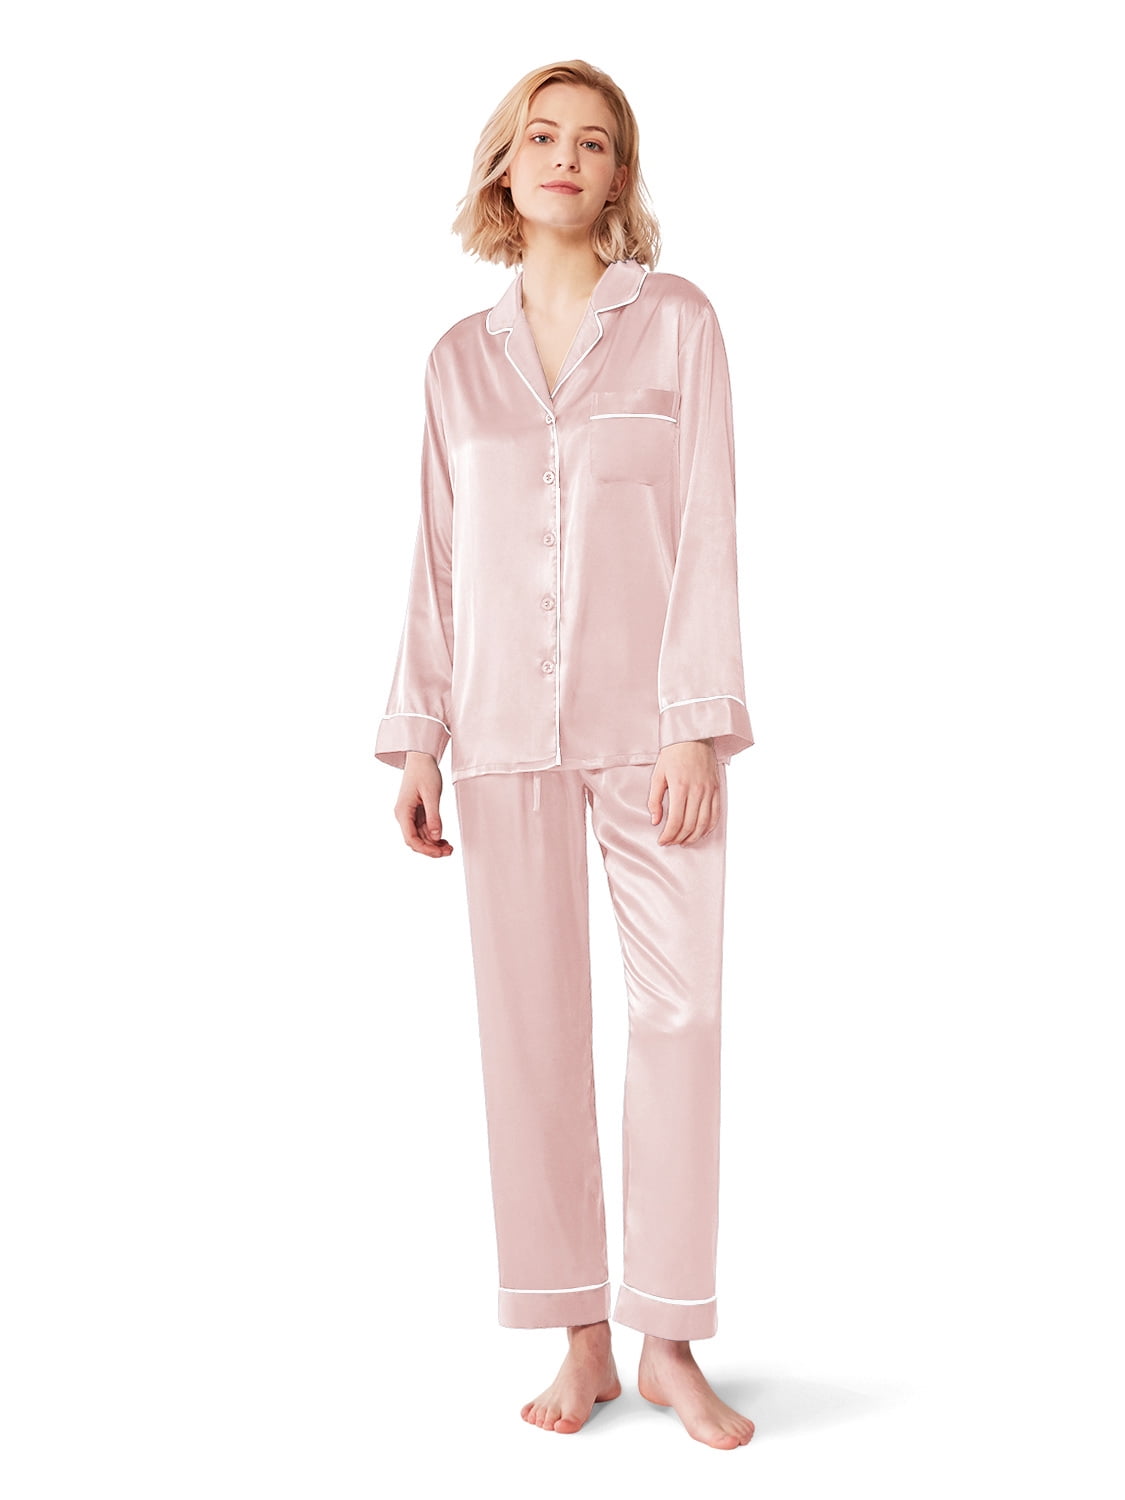 SIORO Mens Silky Satin Pajama Sets-Long Sleeve Pj Set Sleepwear Loungewear Medium-XX-Large